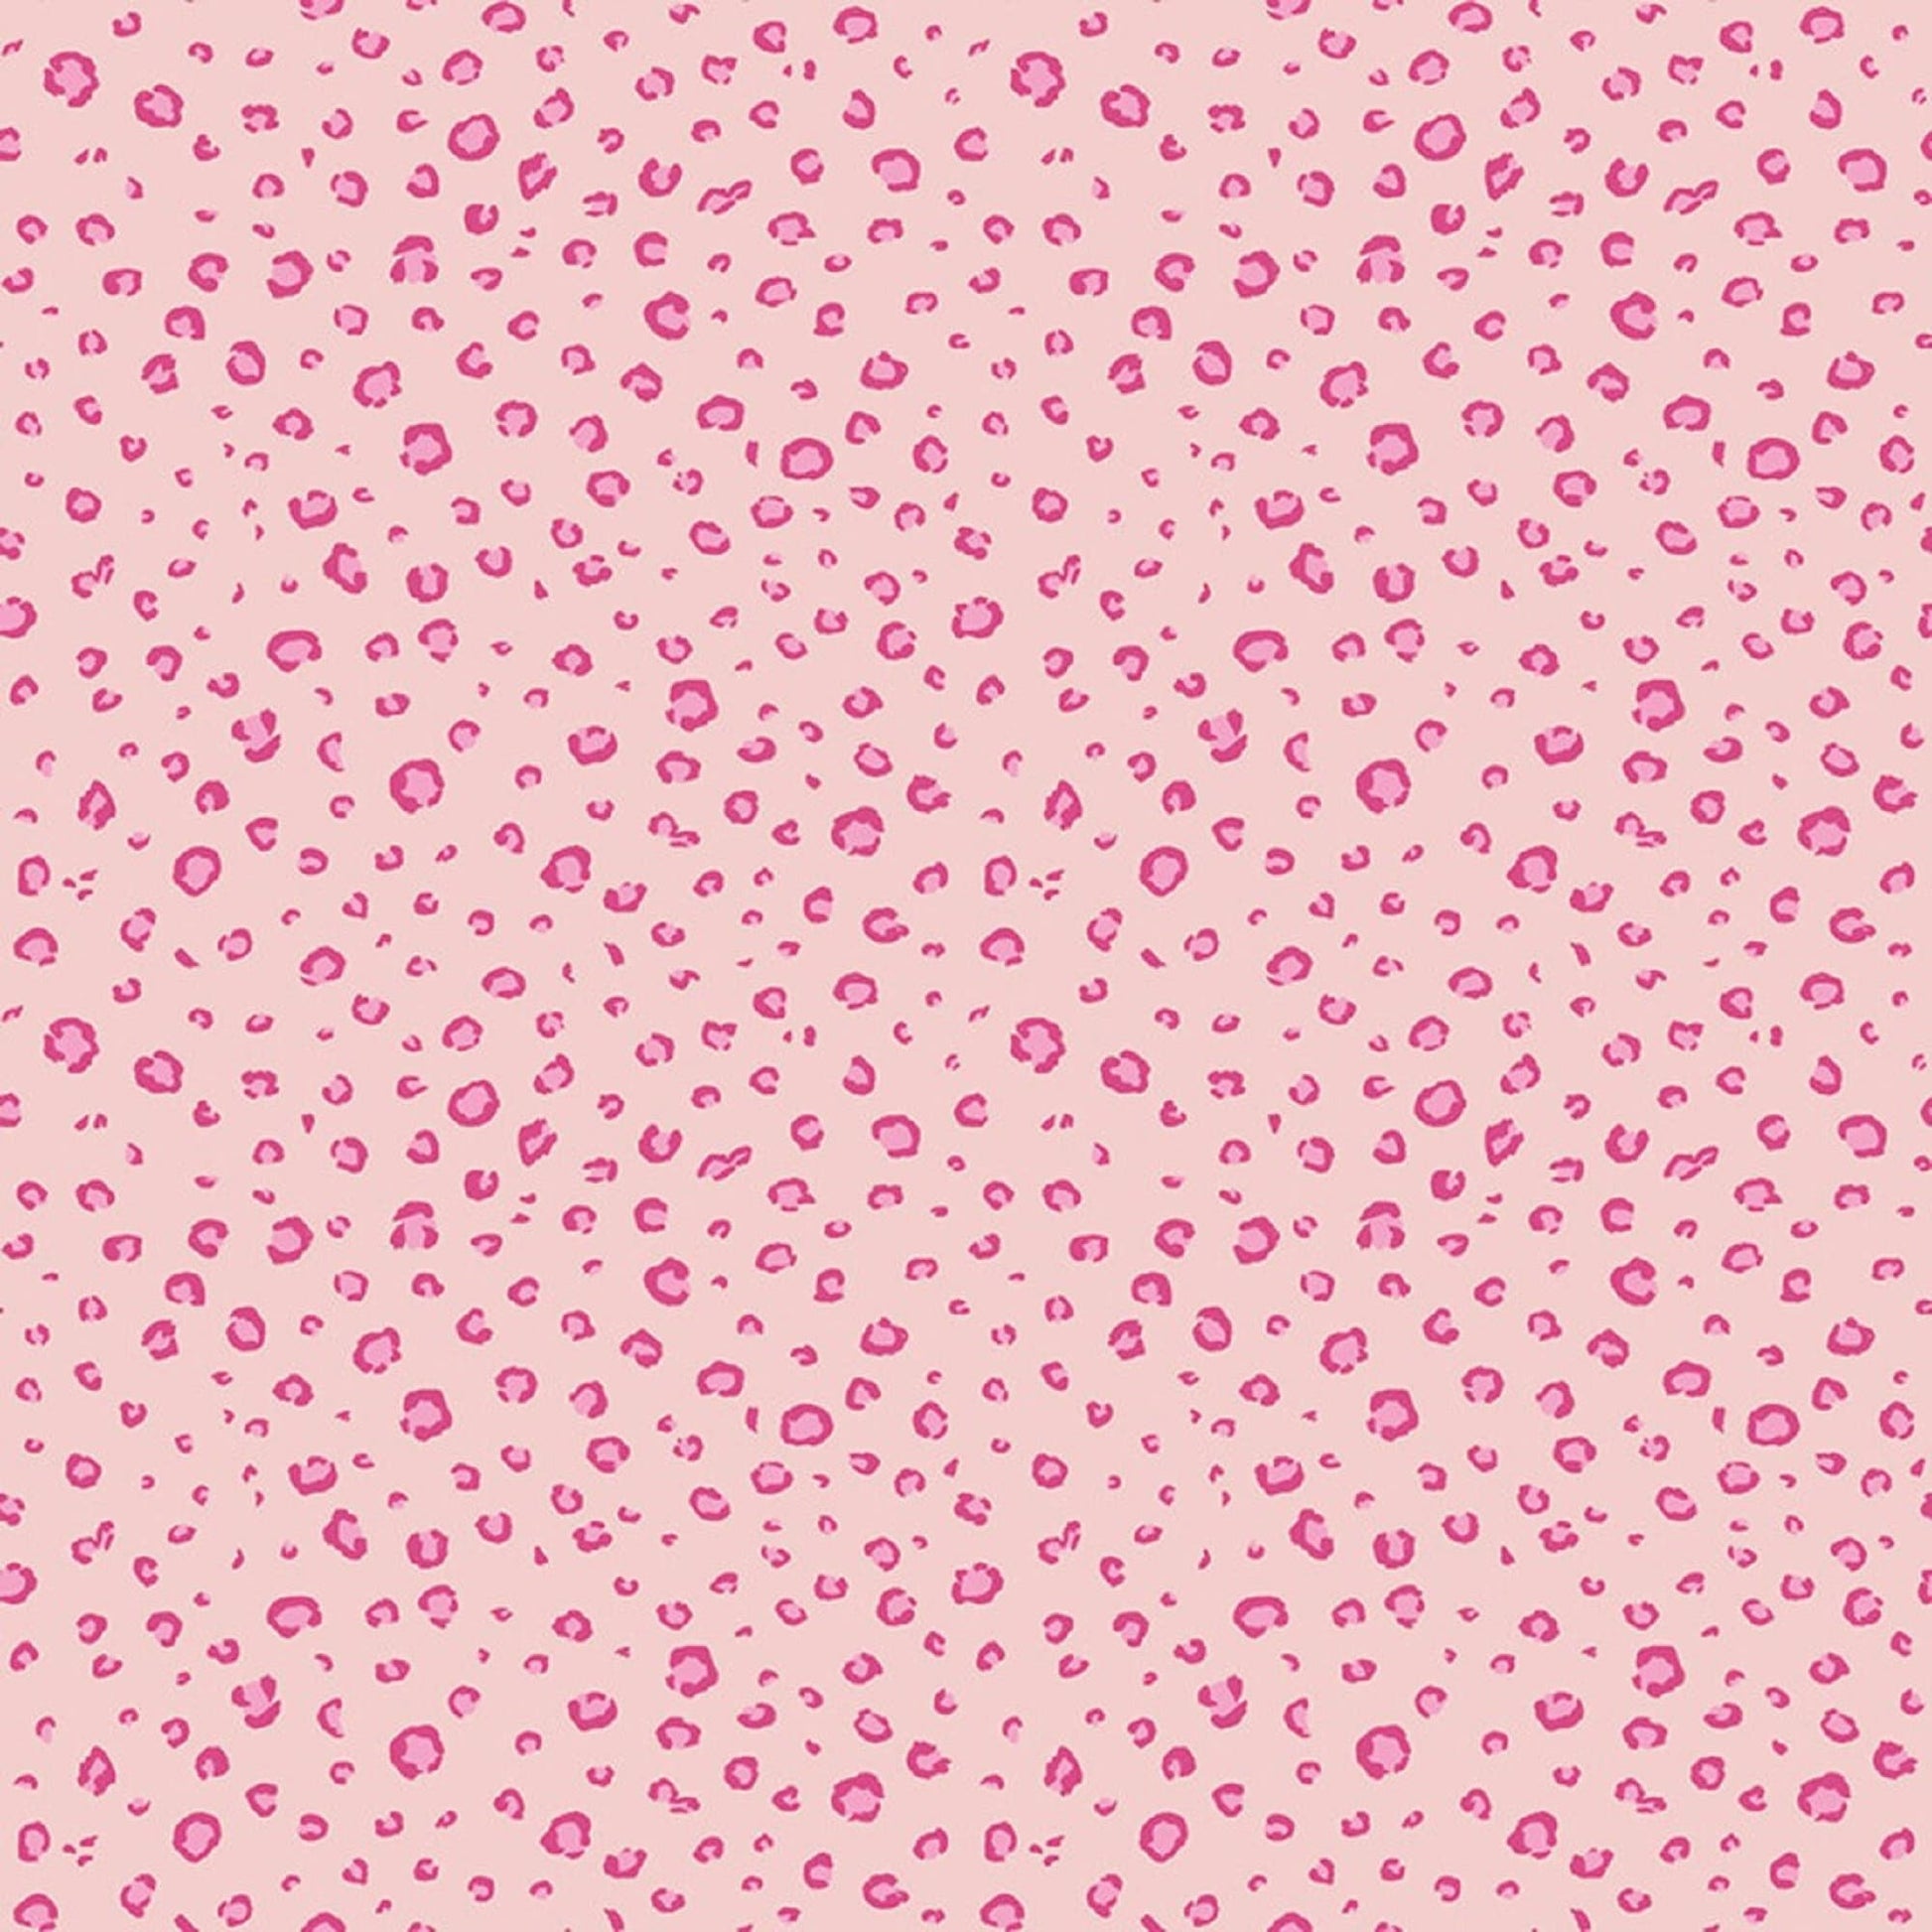 Leopard Spots Pink Leafy Keen Amanda Niederhauser Riley Blake Designs Quilting Cotton Fabric Fabric Fetish